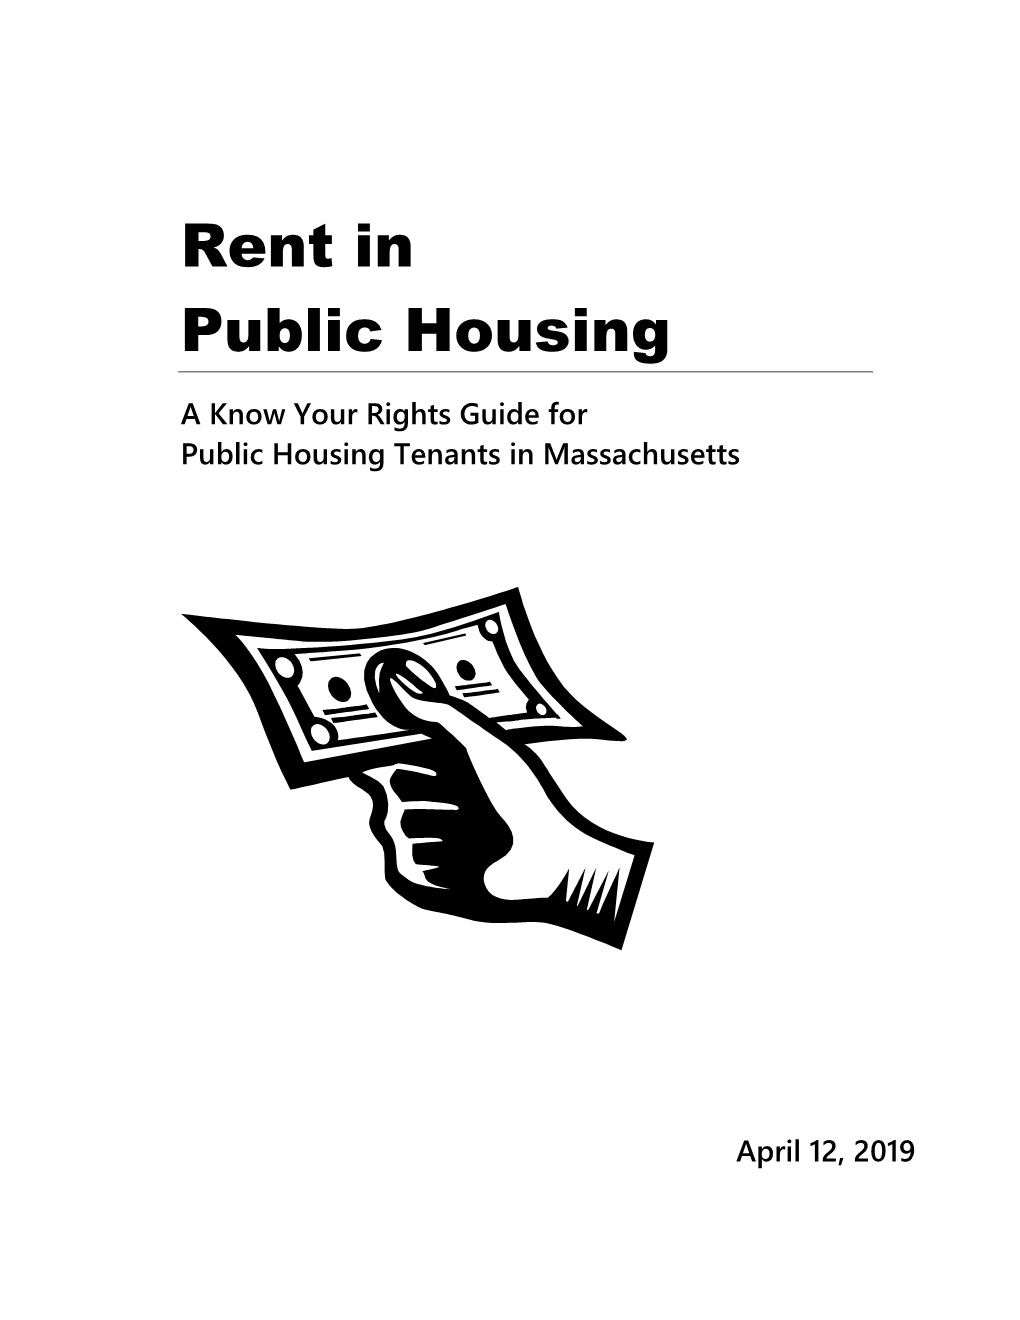 Rent in Public Housing